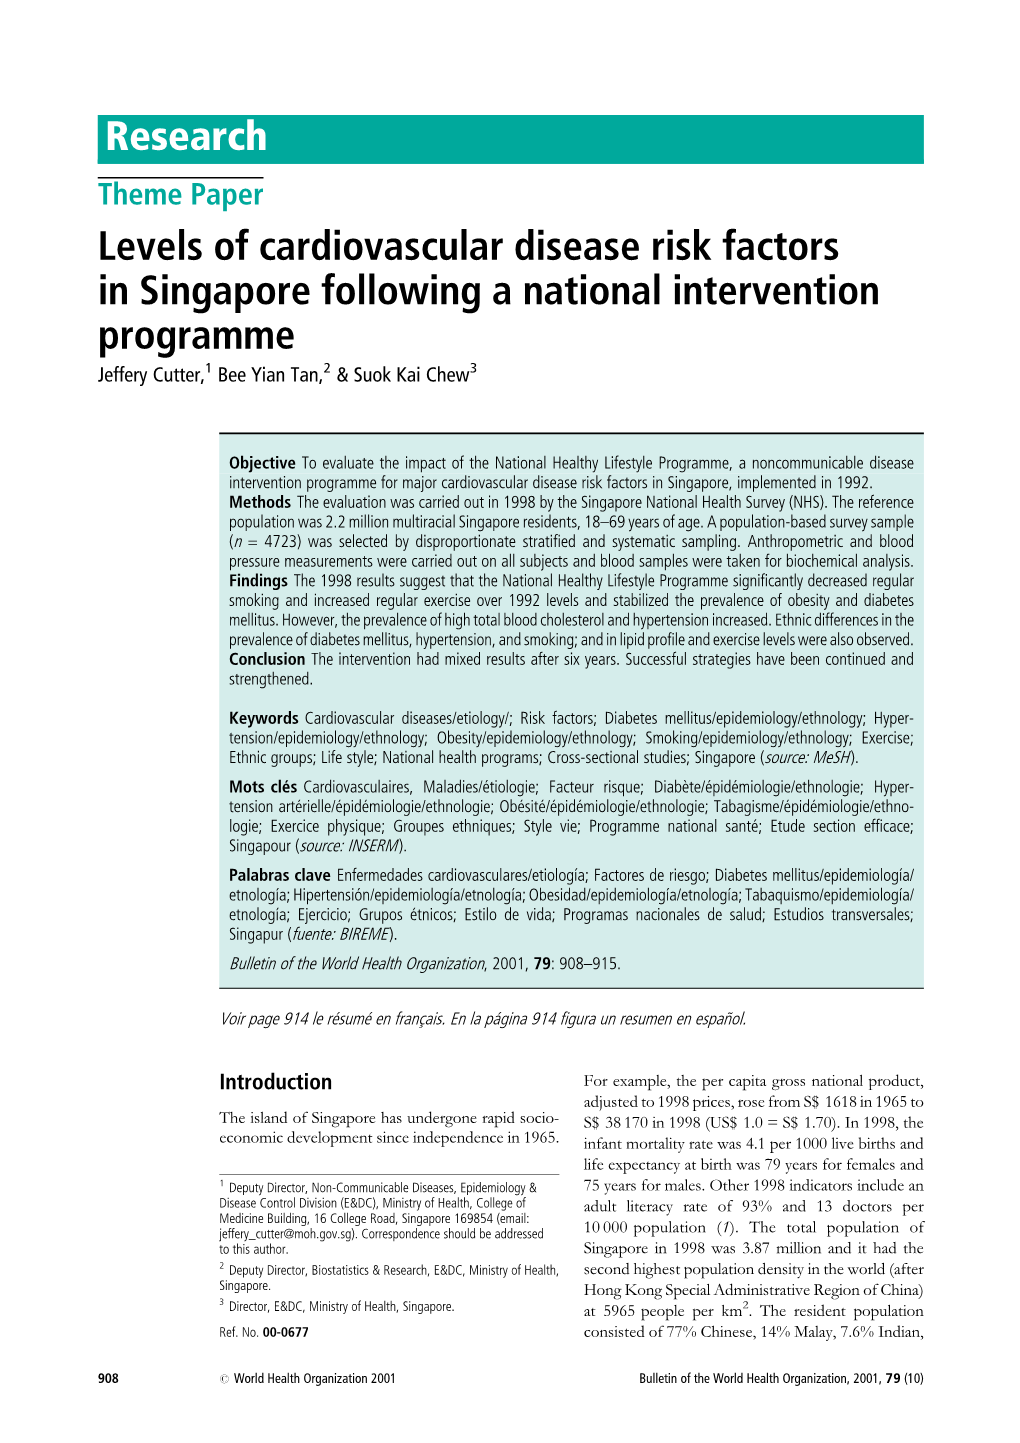 Levels of Cardiovascular Disease Risk Factors in Singapore Following a National Intervention Programme Jeffery Cutter,1 Bee Yian Tan,2 & Suok Kai Chew3